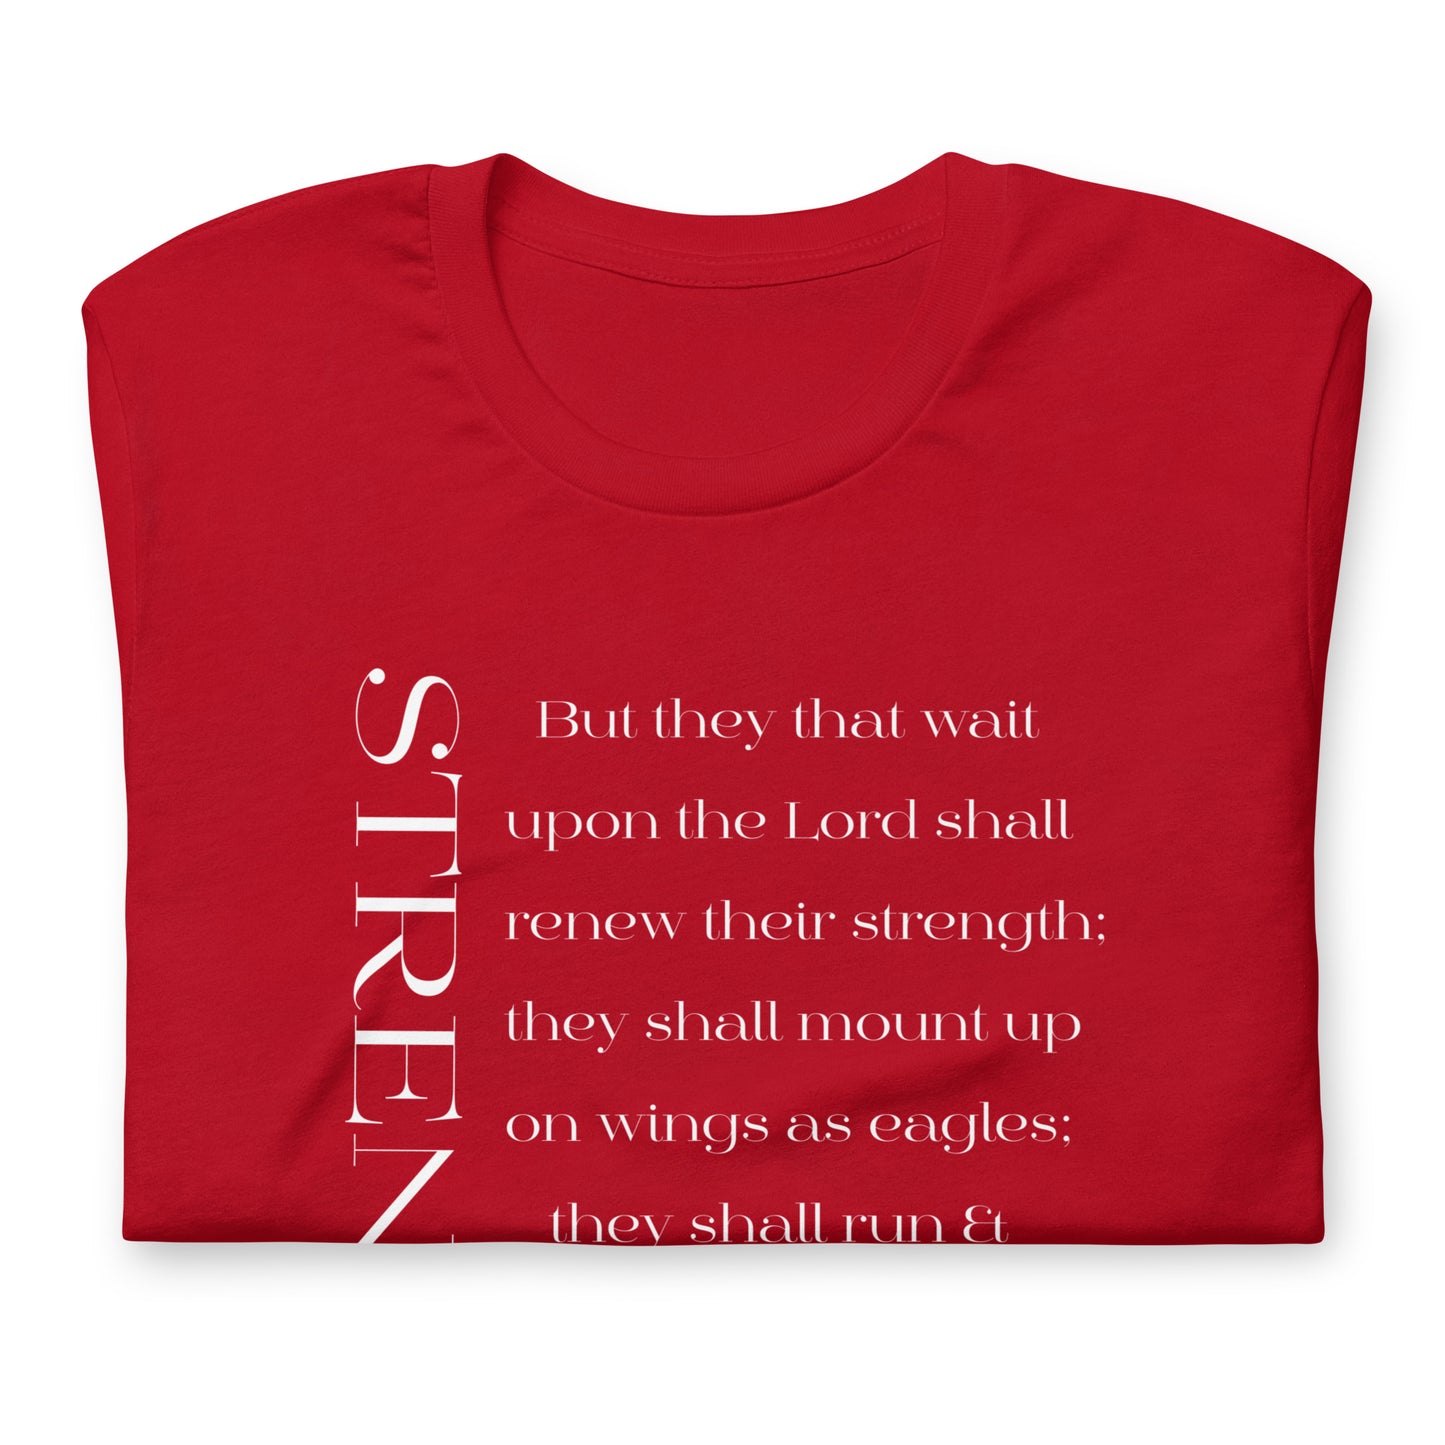 Isaiah 40:31 Strength Short-Sleeve Unisex T-Shirt red